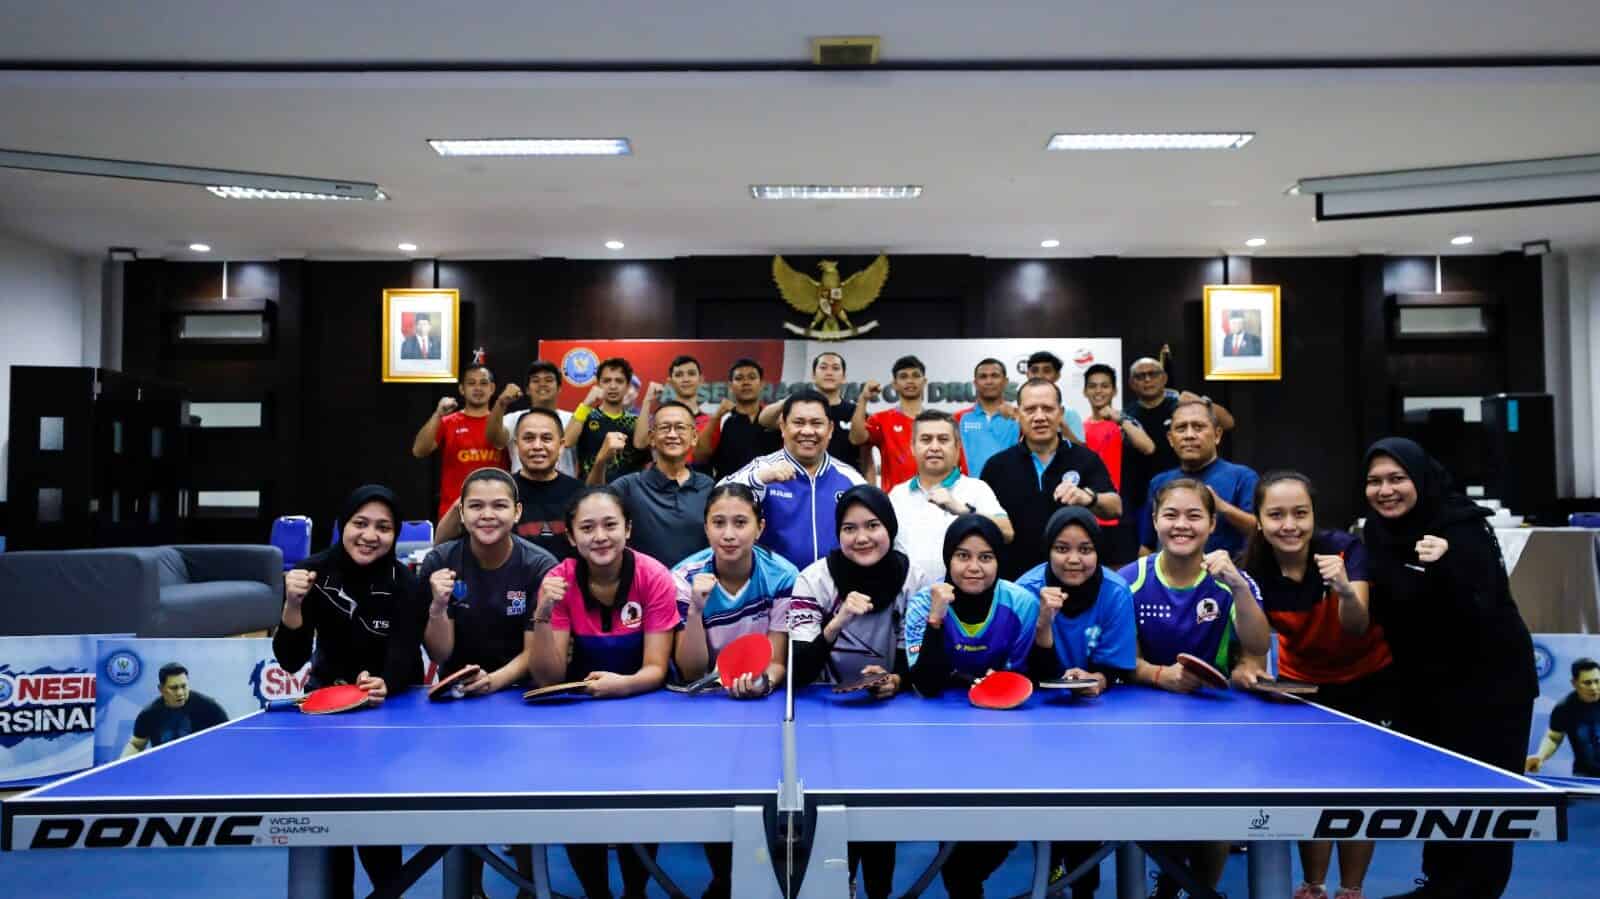 Jalin Silaturahmi, Kepala BNN RI Gelar "Halalbihalal Cup" Bagi Atlet Nasional Tenis Meja